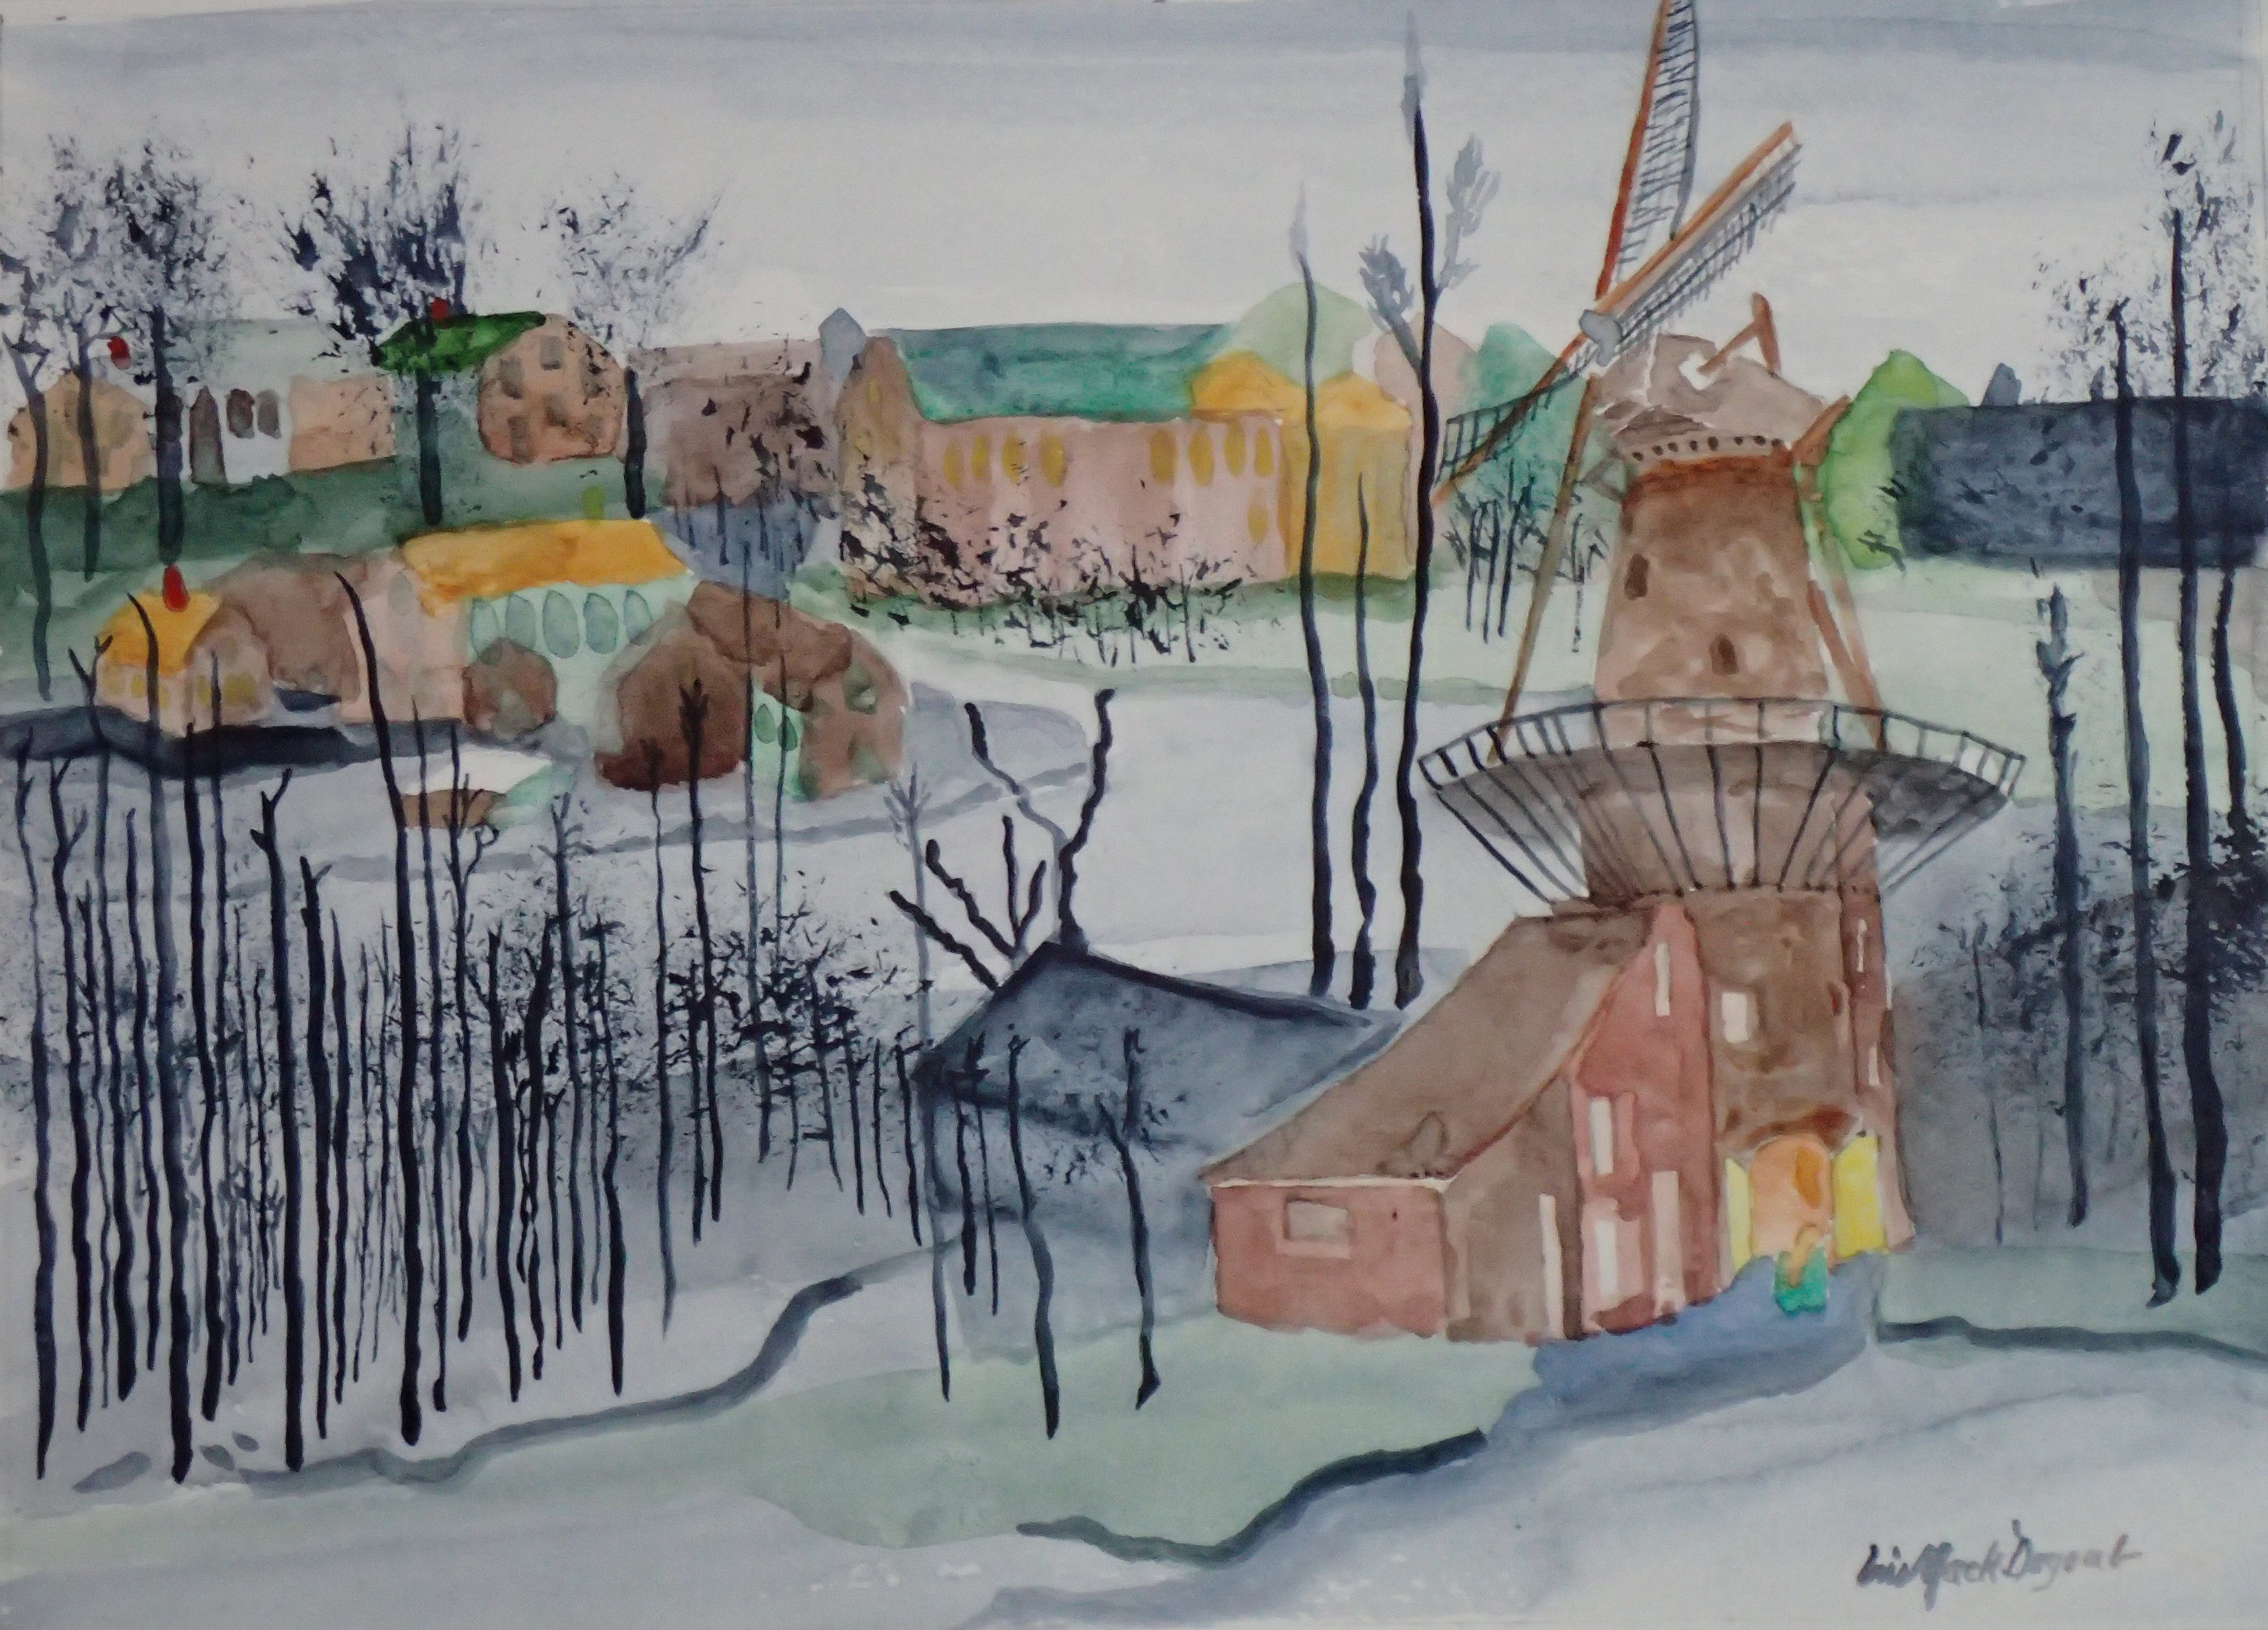 Windmill in Winter